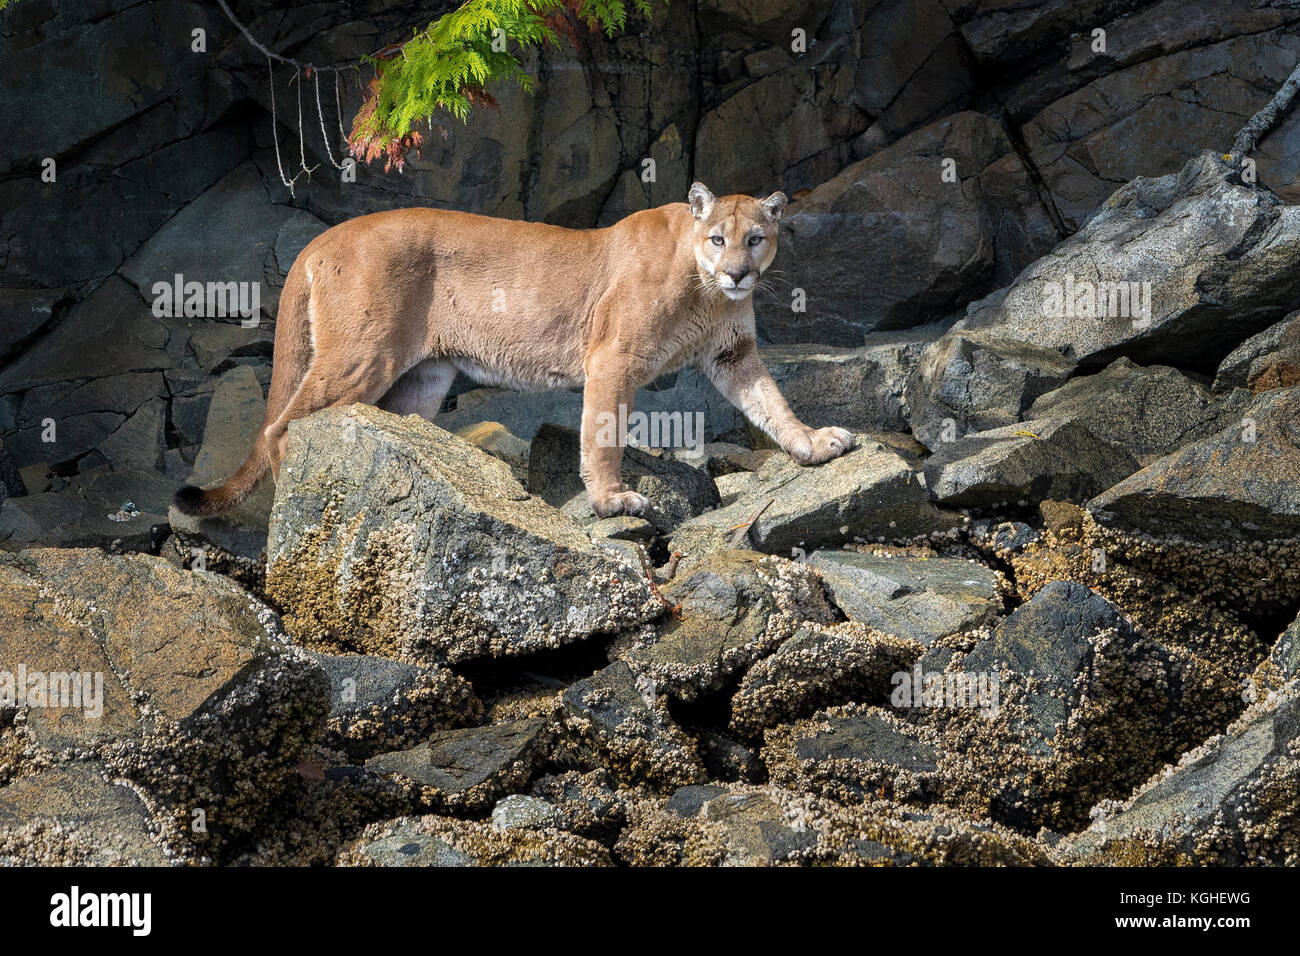 Vancouver Island Cougar Fotos Und Bildmaterial In Hoher Auflösung Alamy